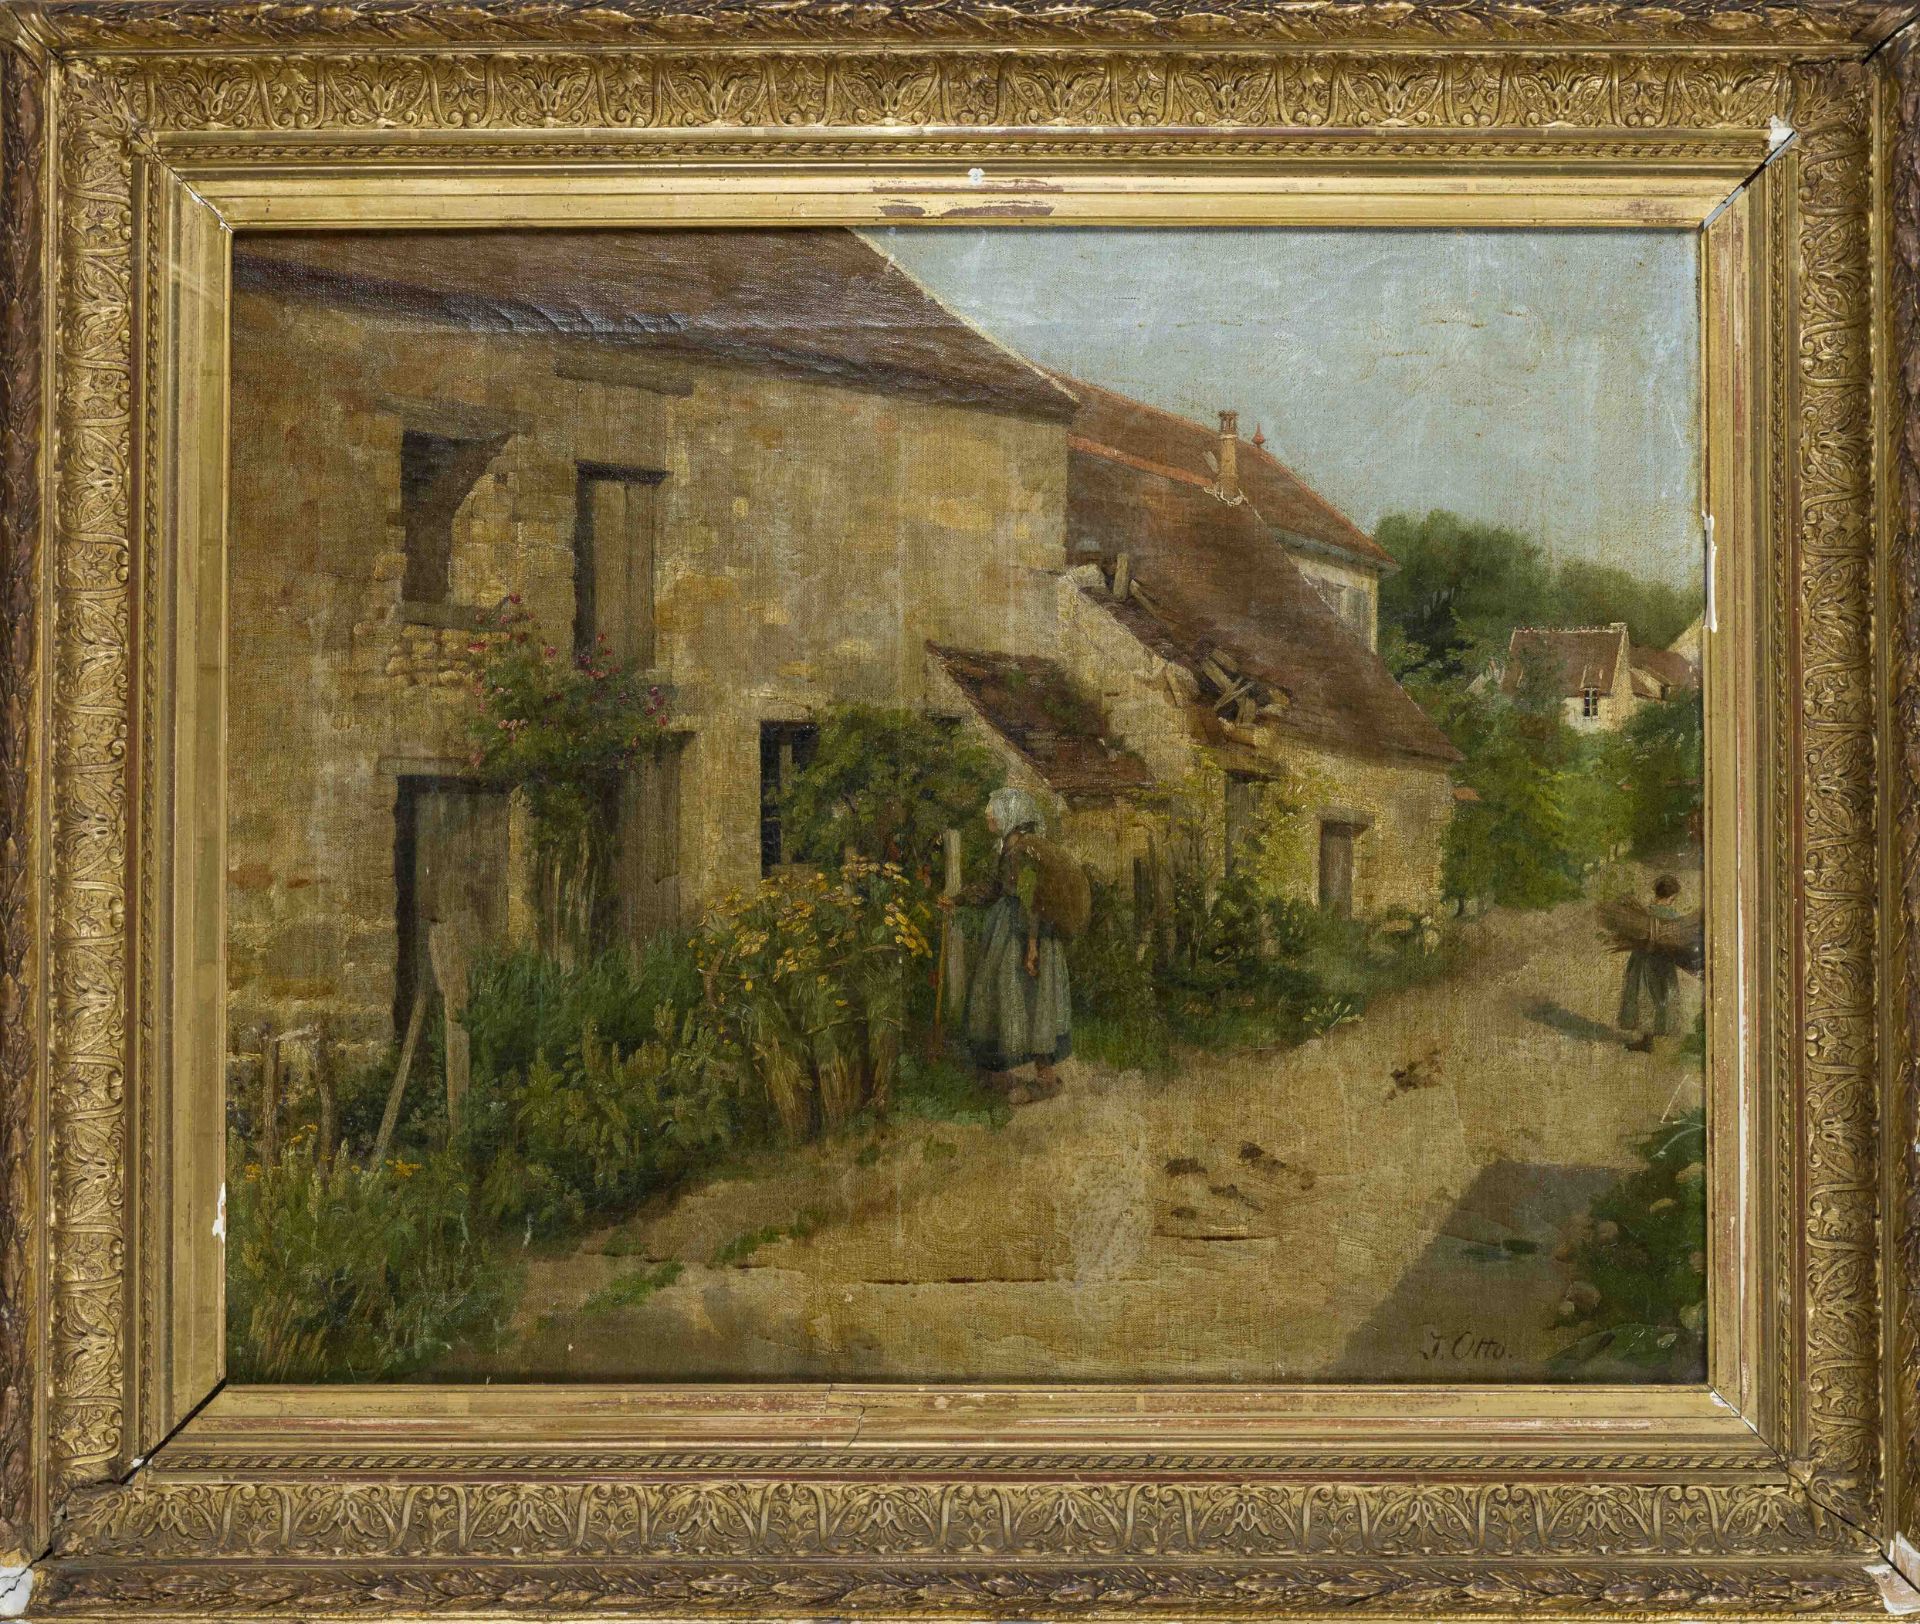 Johanna Otto (1839-1914), attrib., painter from Giessen, who studied in Munich and Paris. Village